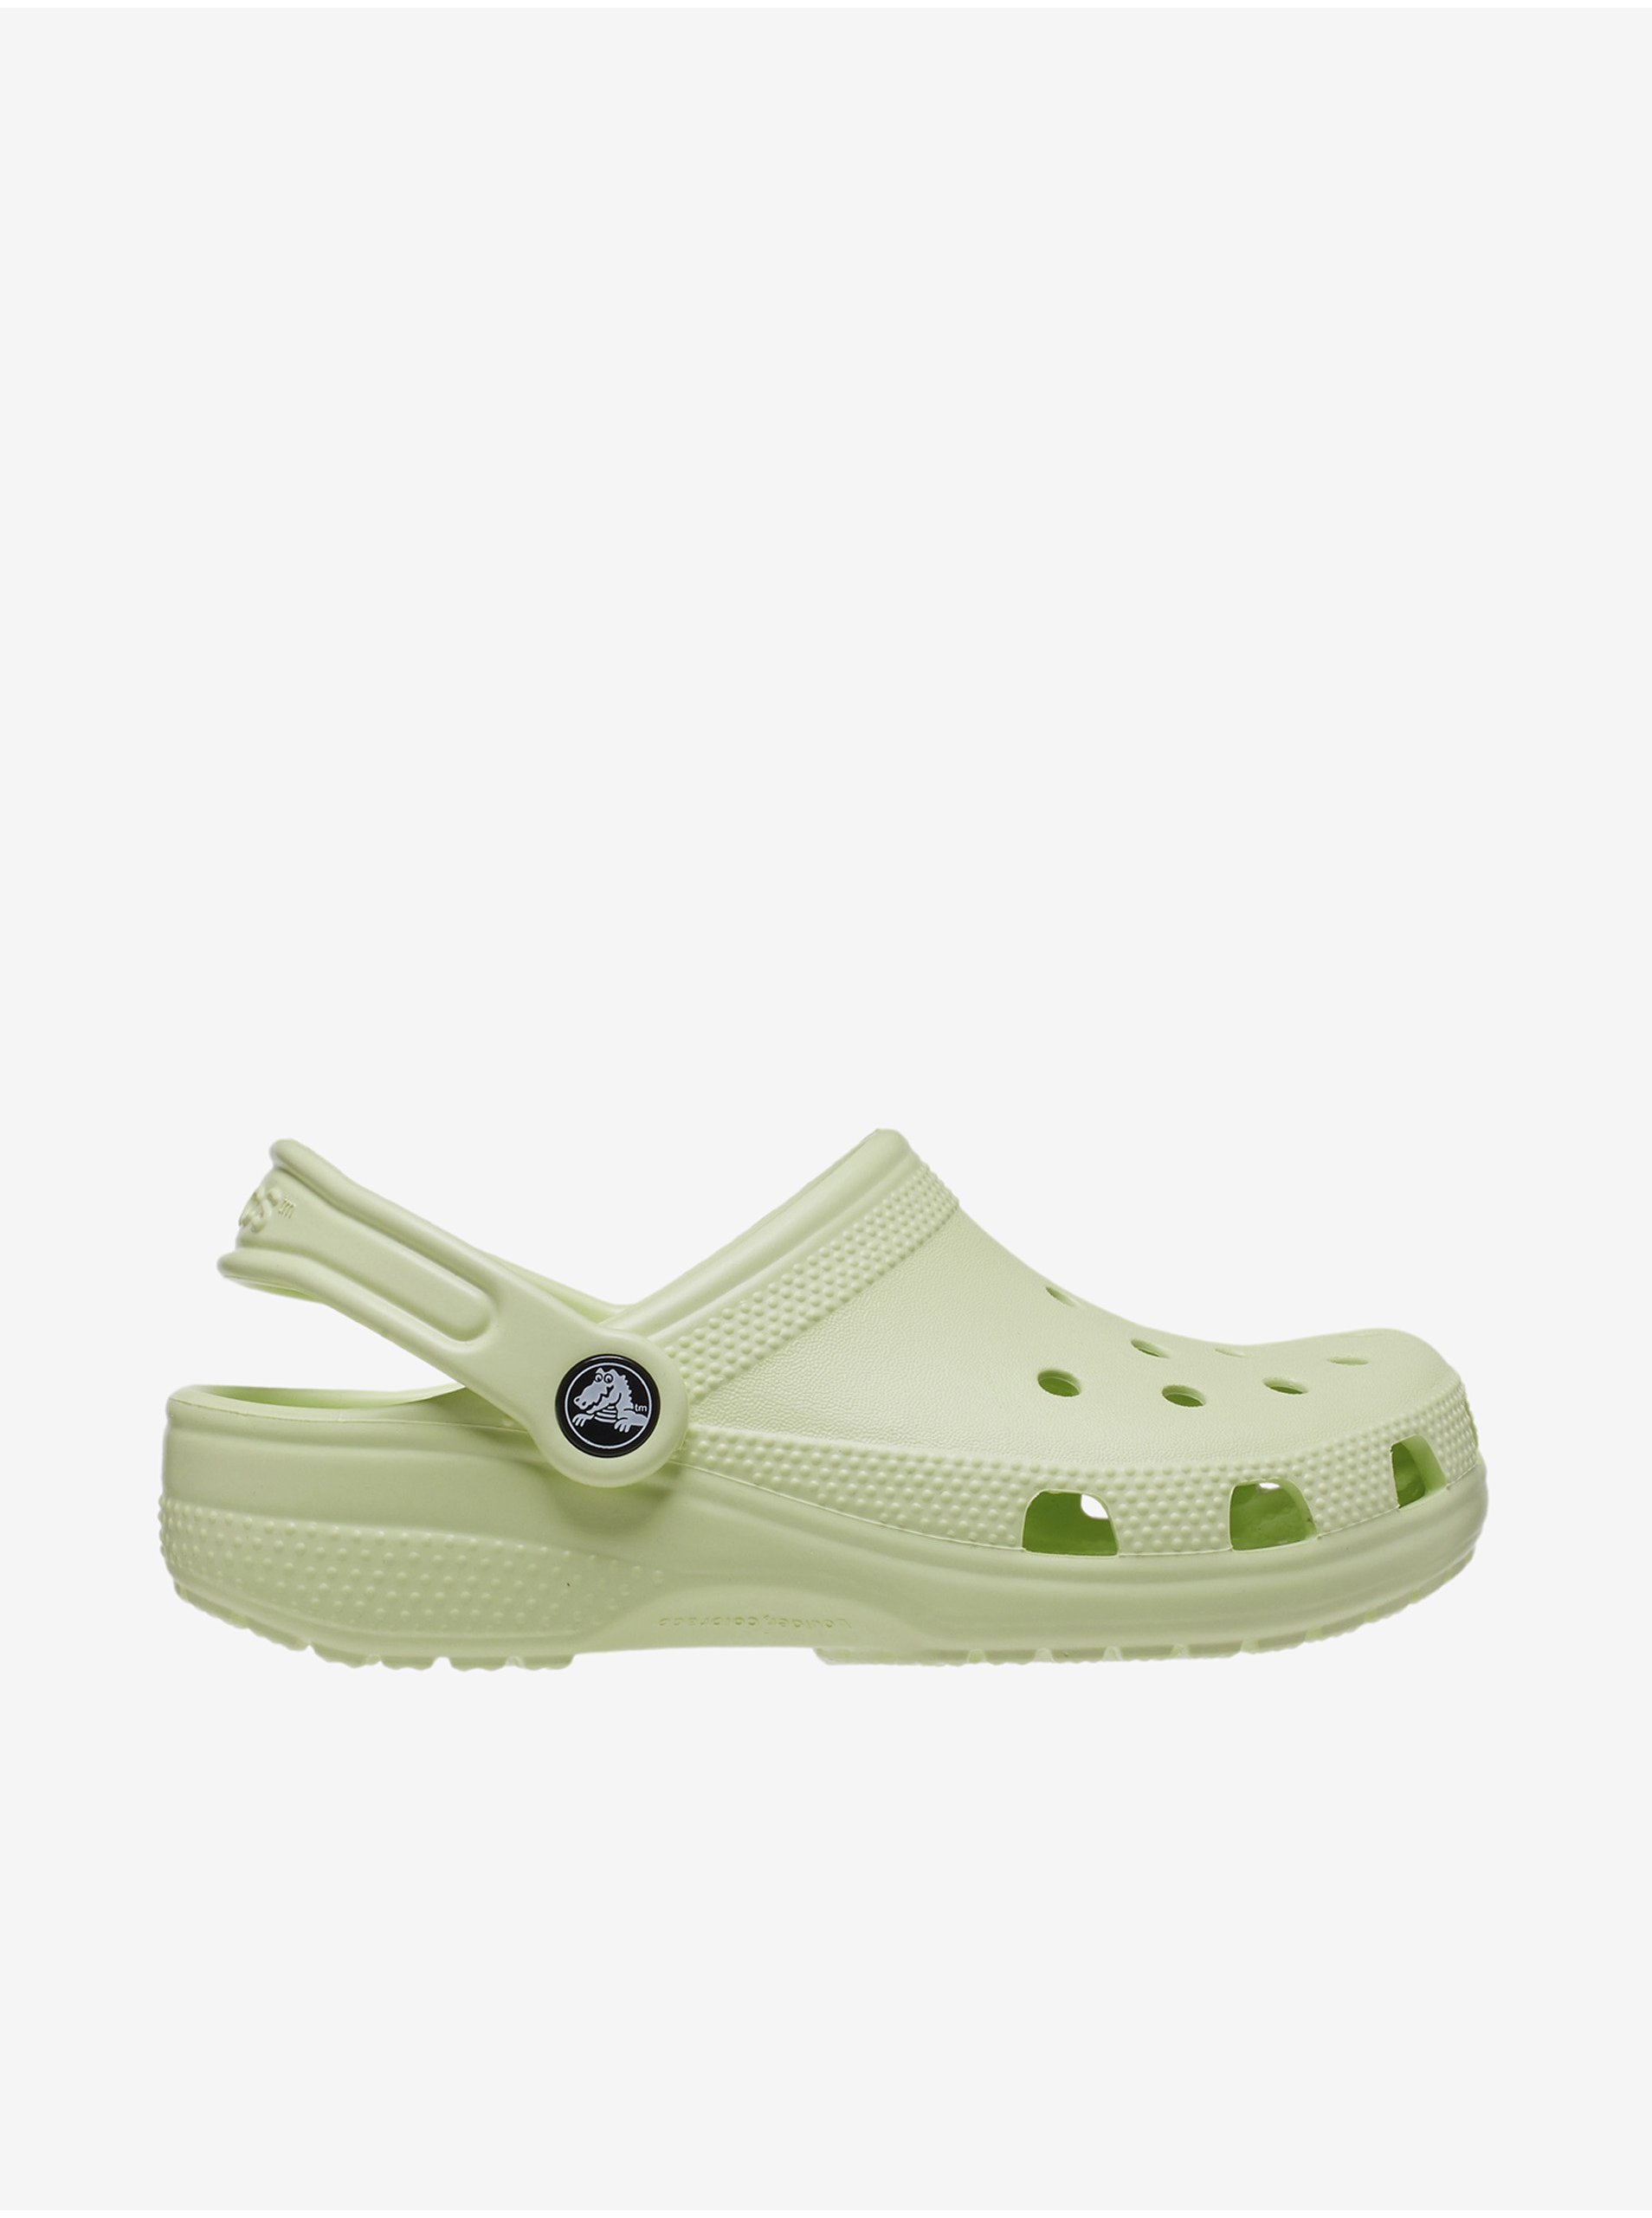 Light Green Crocs Kids' Slippers - Girls